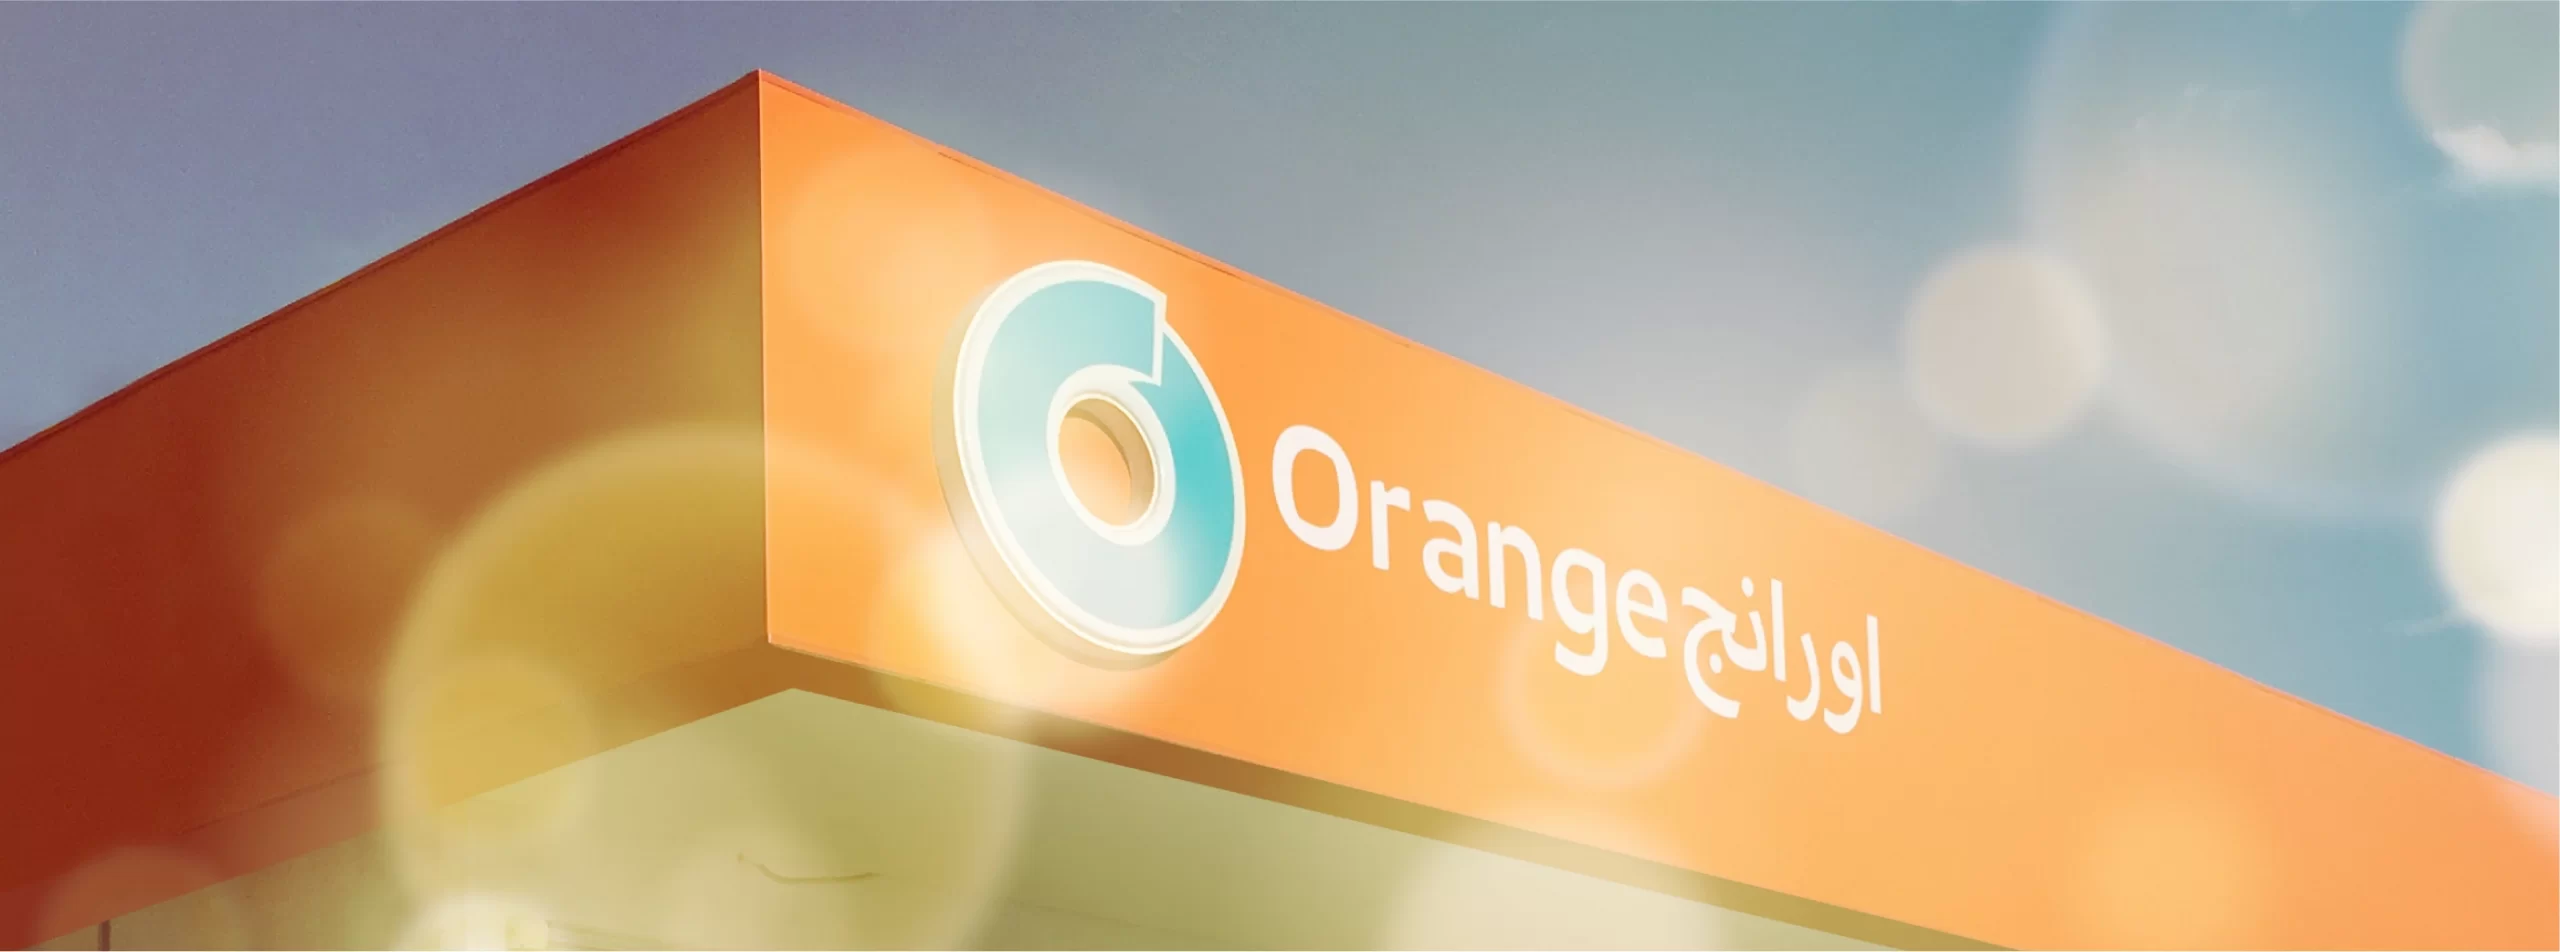 Orange_Pharmacies_Exterior_Signage_logo_Emboss